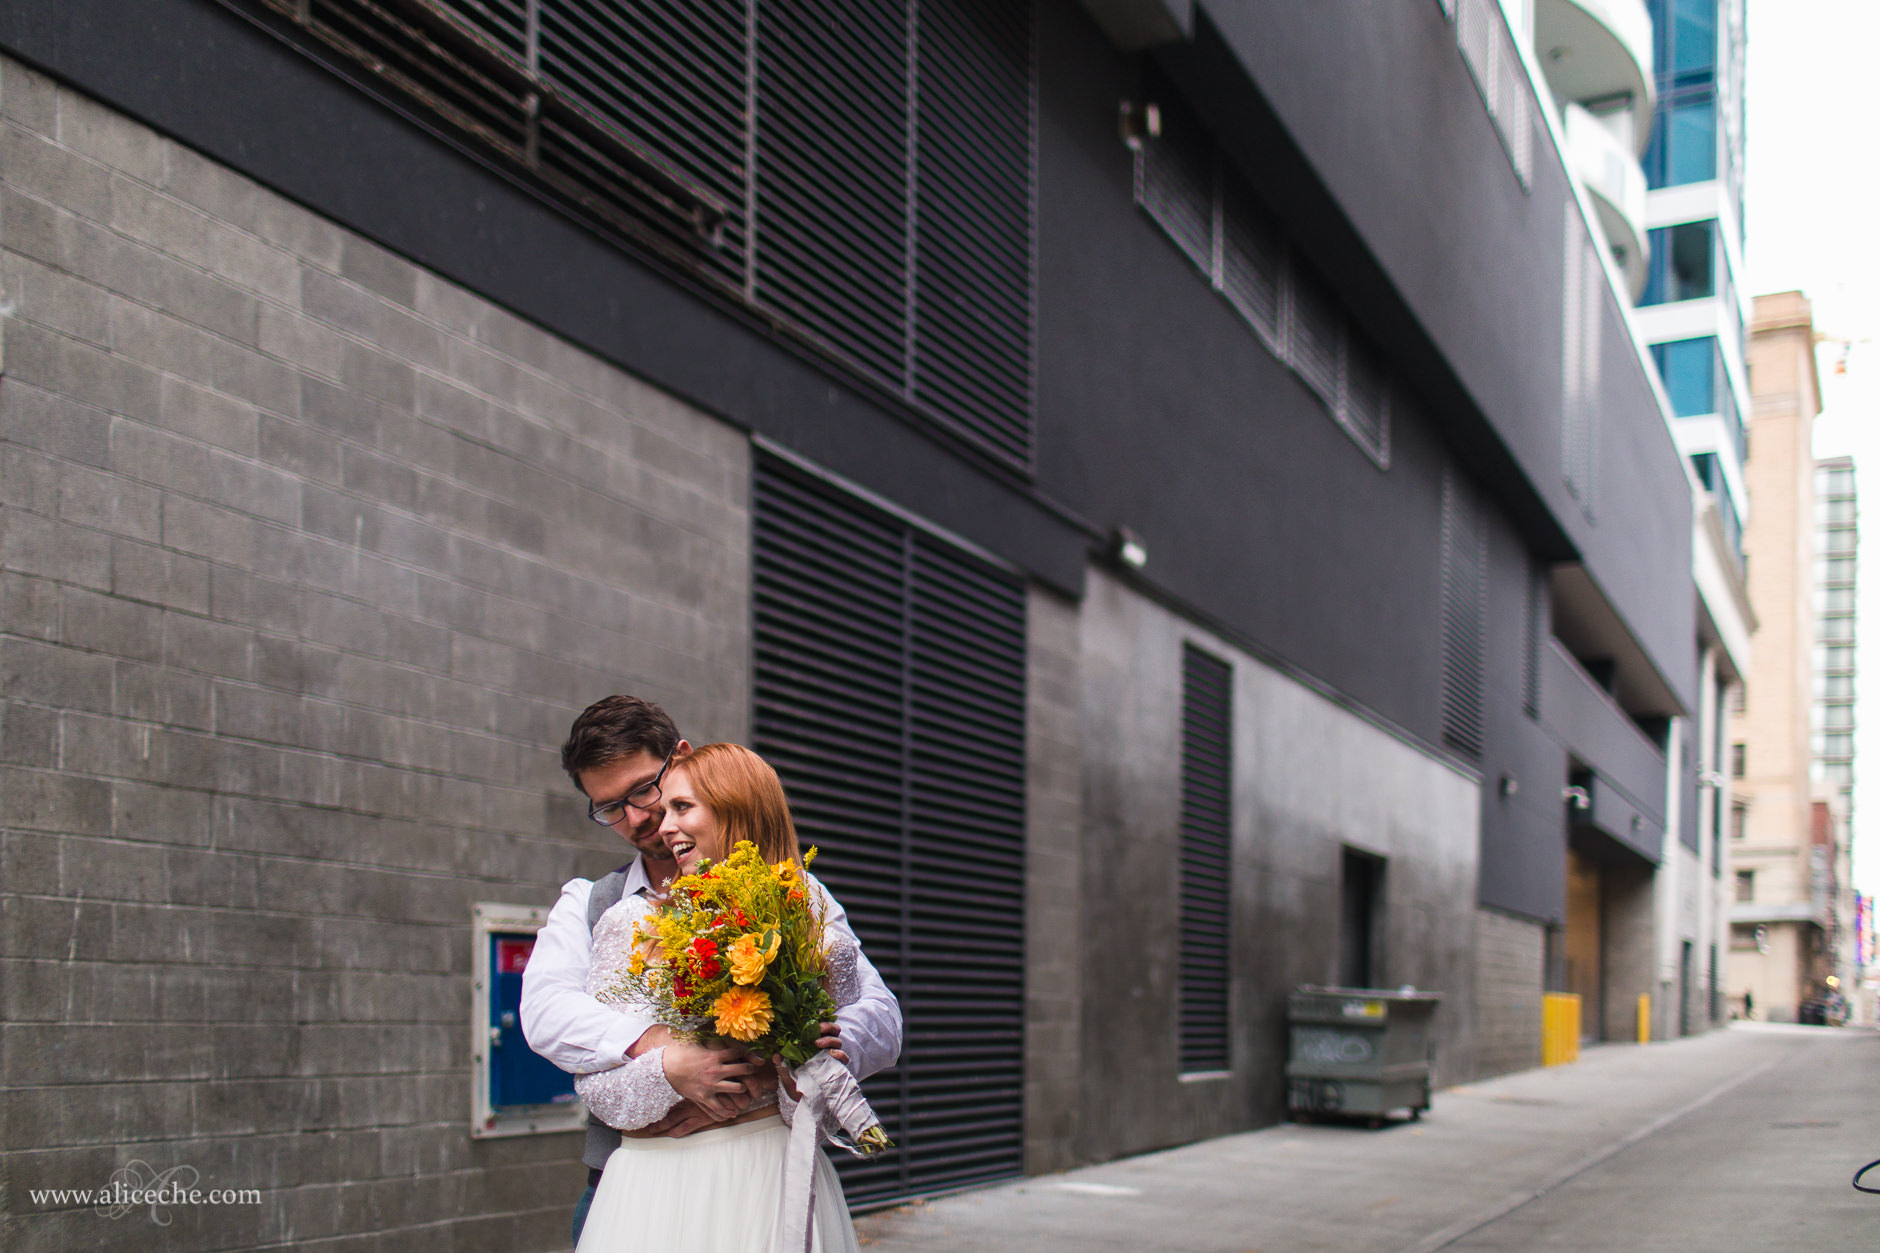 Groom hugging redhaired bride in alley